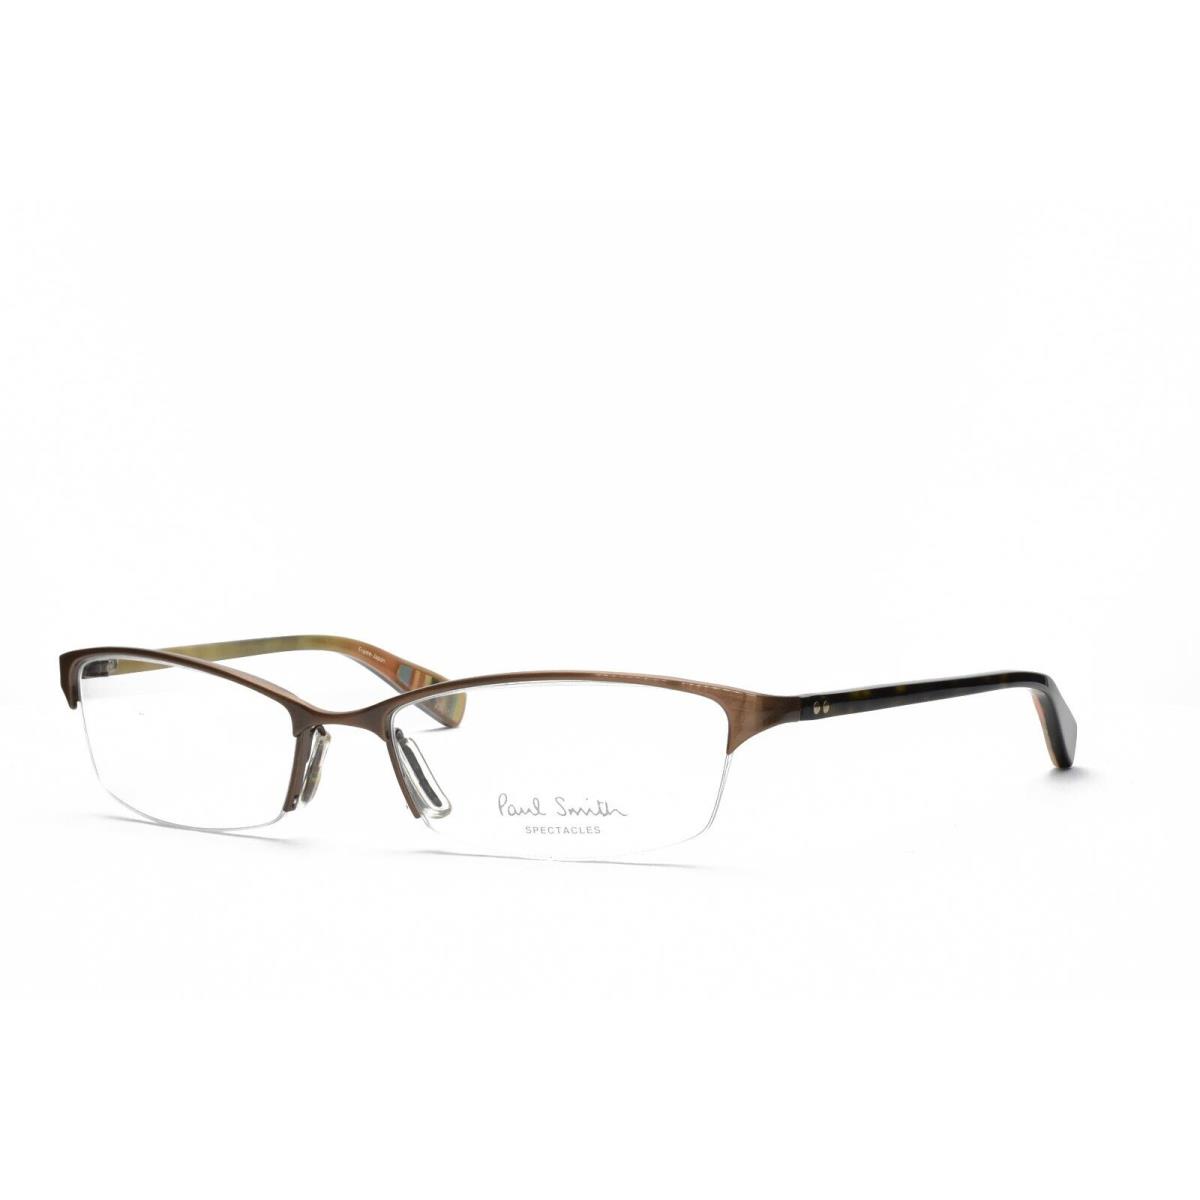 Paul Smith PS 186 MC Eyeglasses Frames Only 53-17-130